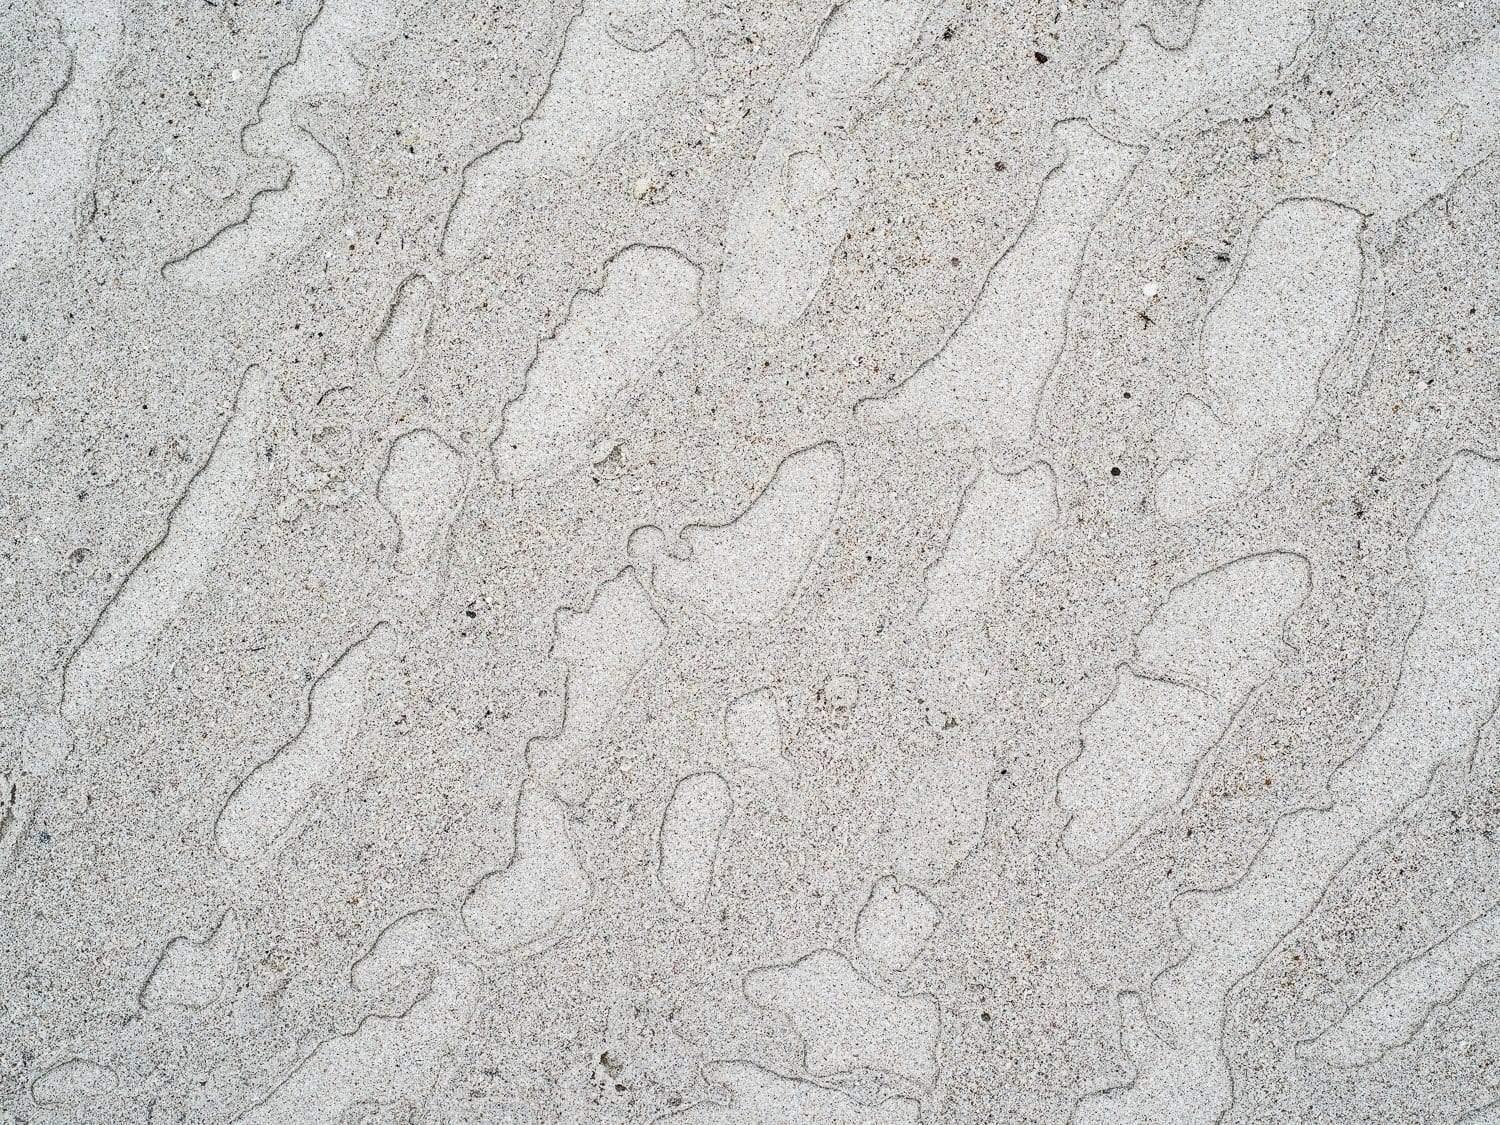 Unique land patterns of dull mustard color, Sand Patterns - Kangaroo Island SA